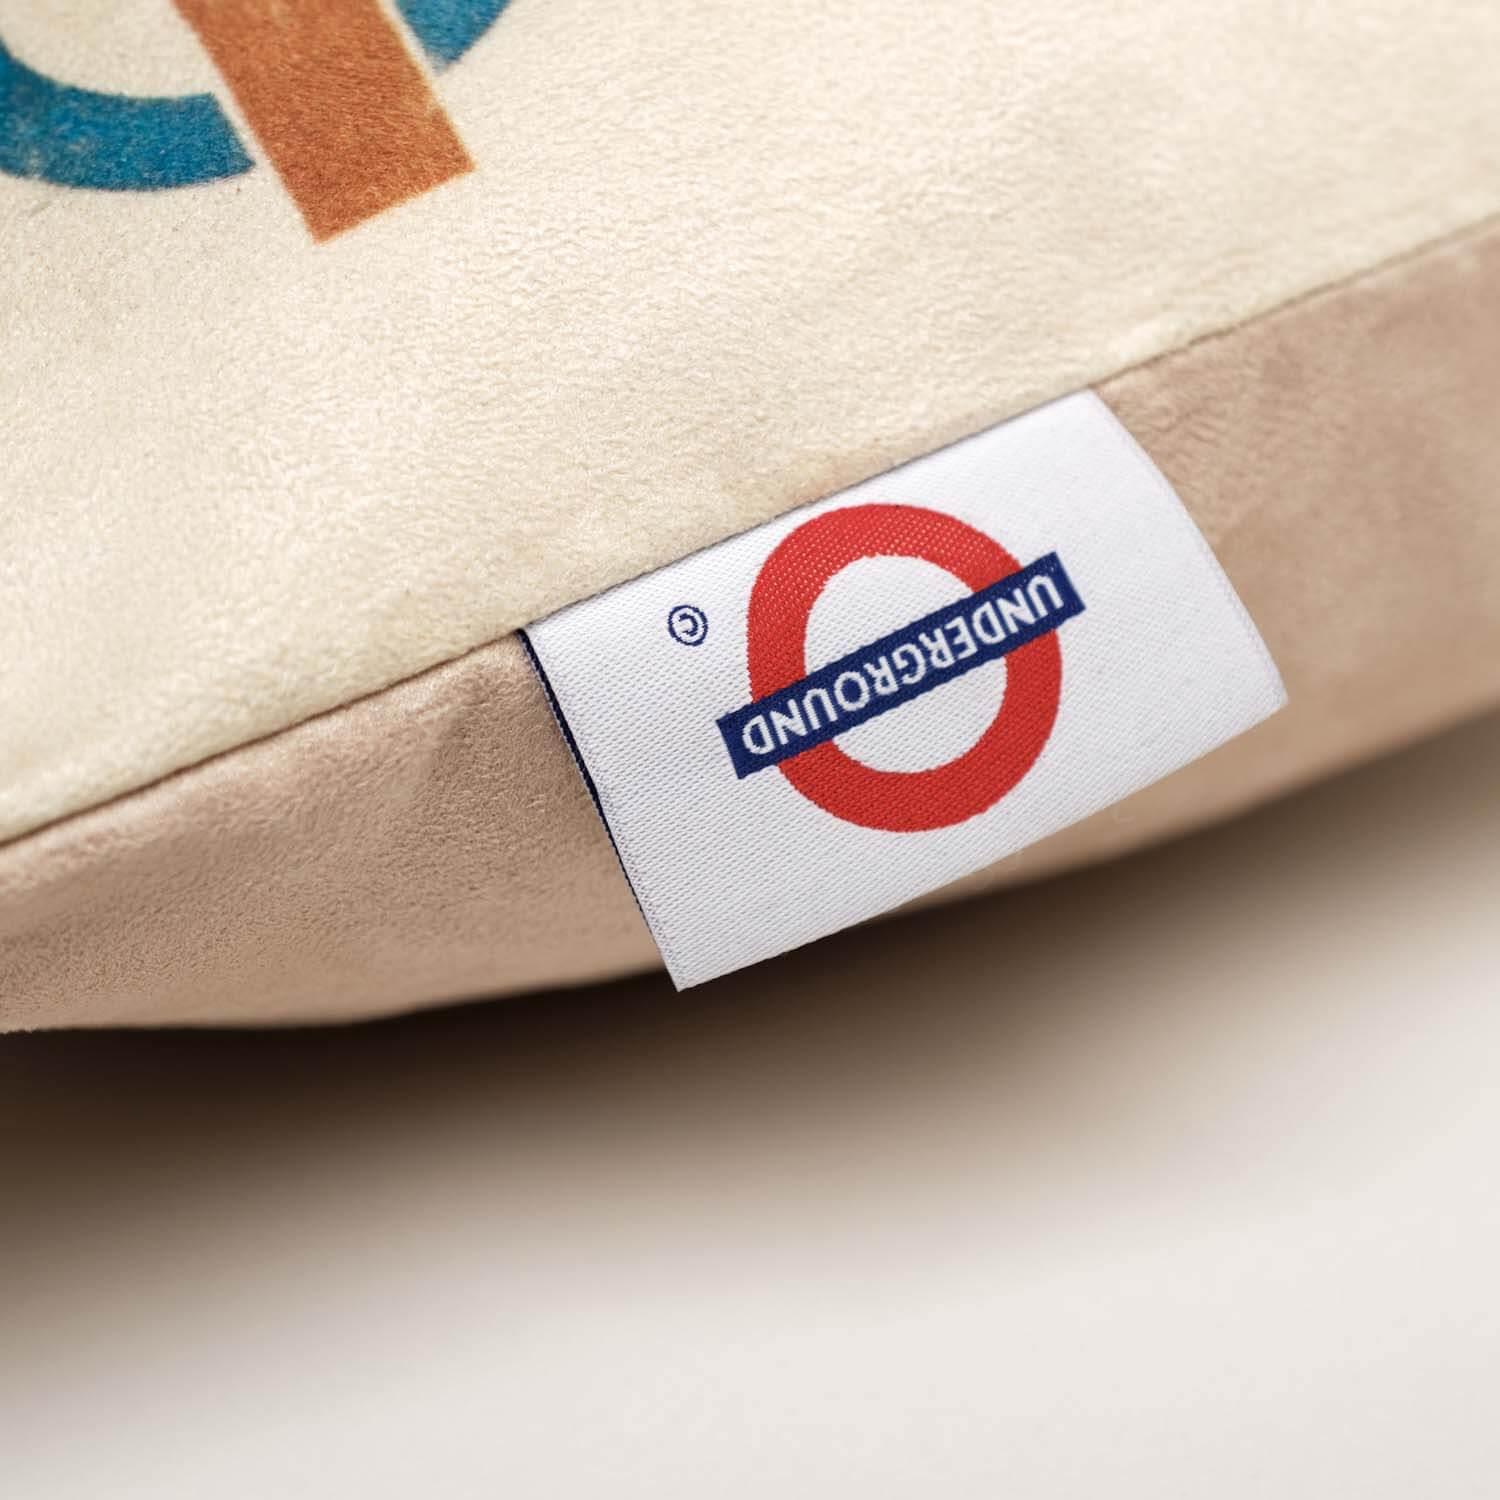 It's Warmer Below - London Transport Cushion - Handmade Cushions UK - WeLoveCushions